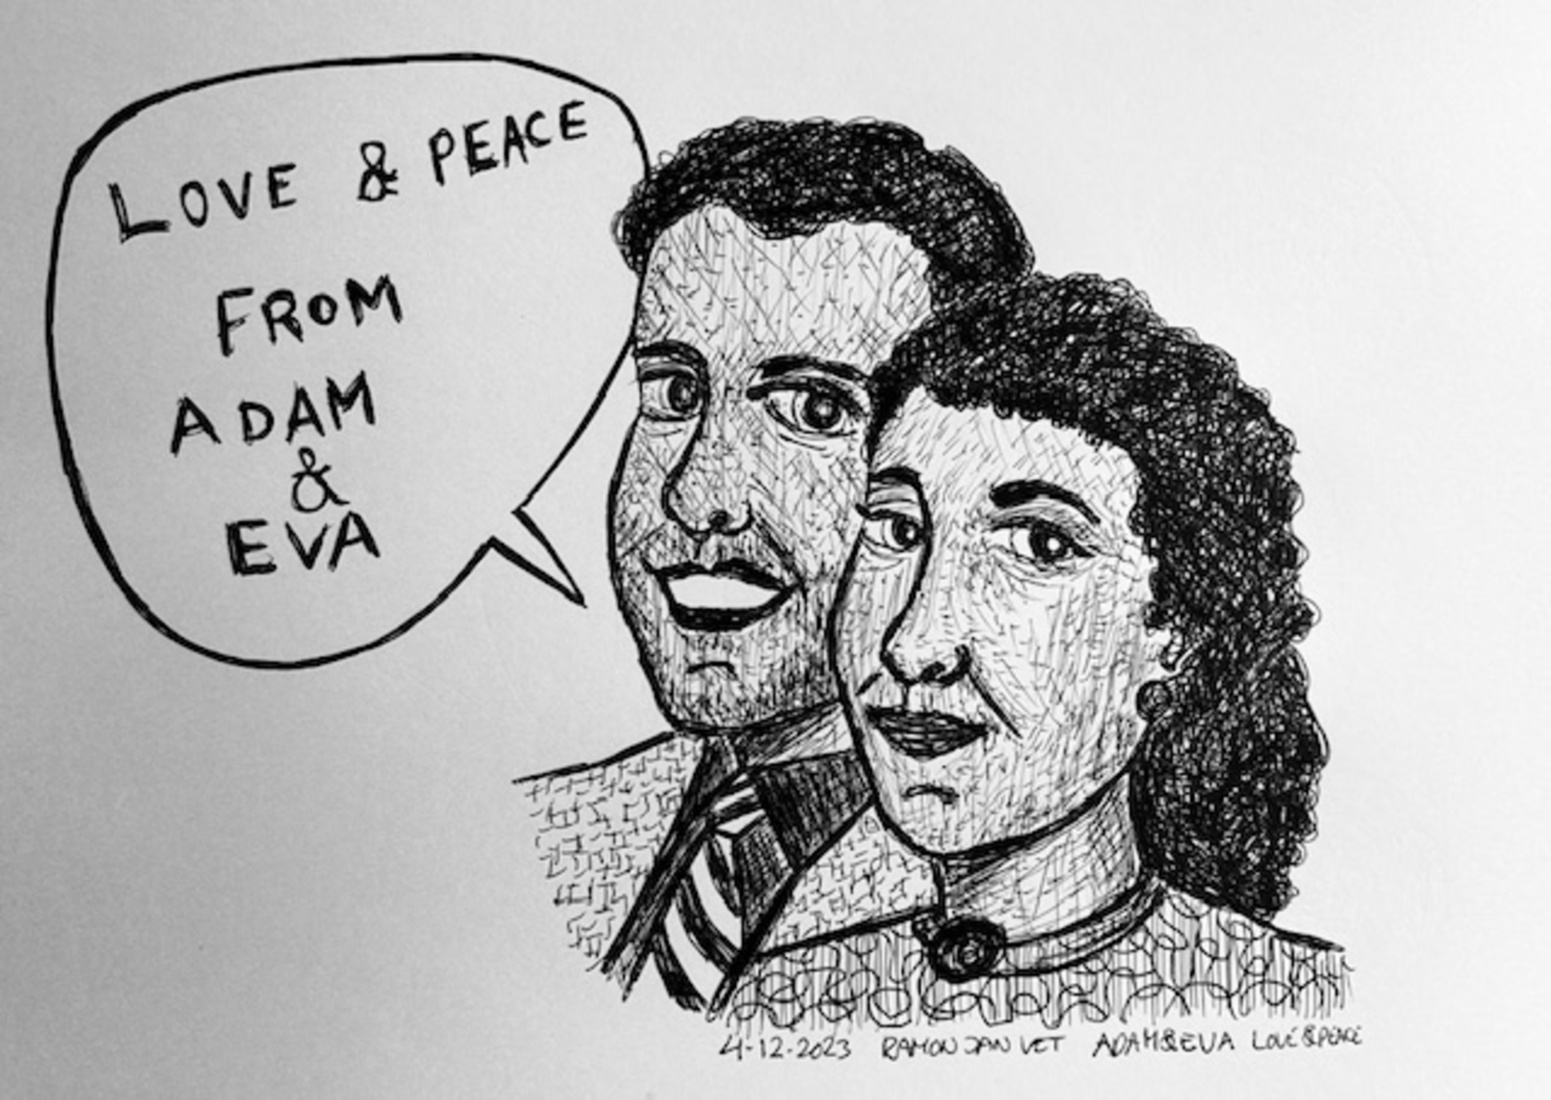 Adam & Eva Love & Peace